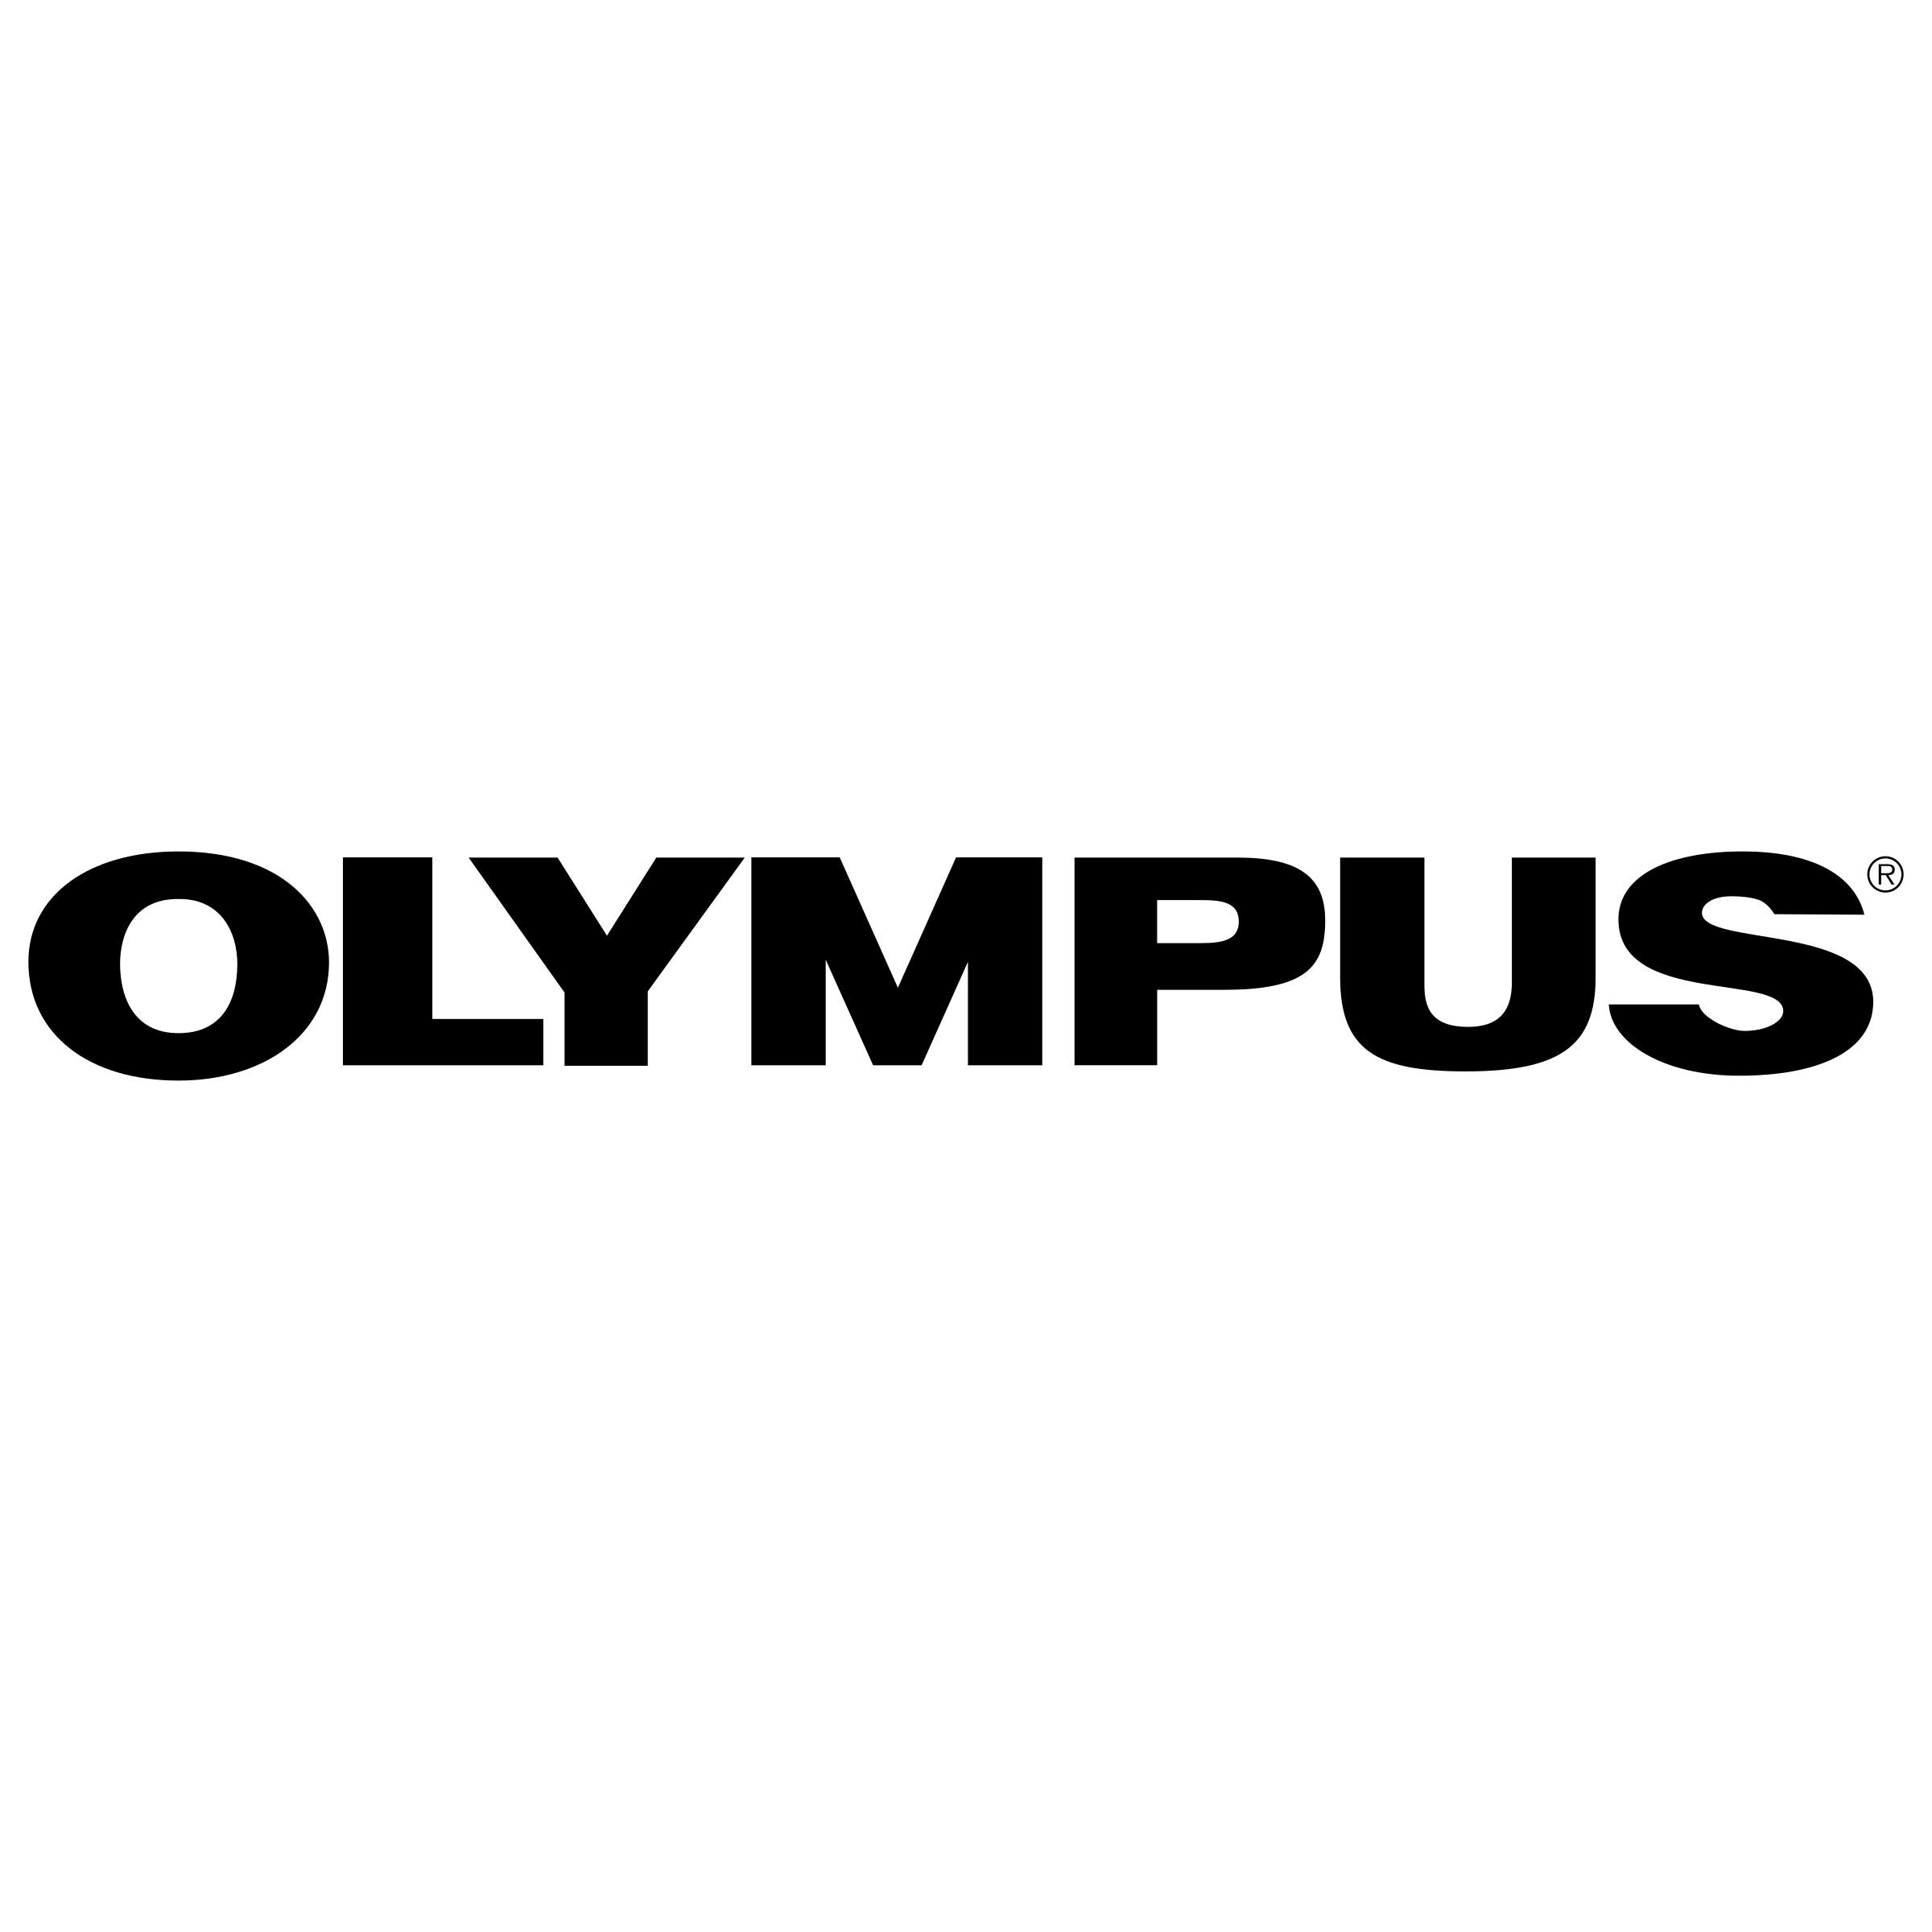 Olympus Logo - Olympus Logo PNG Transparent & SVG Vector